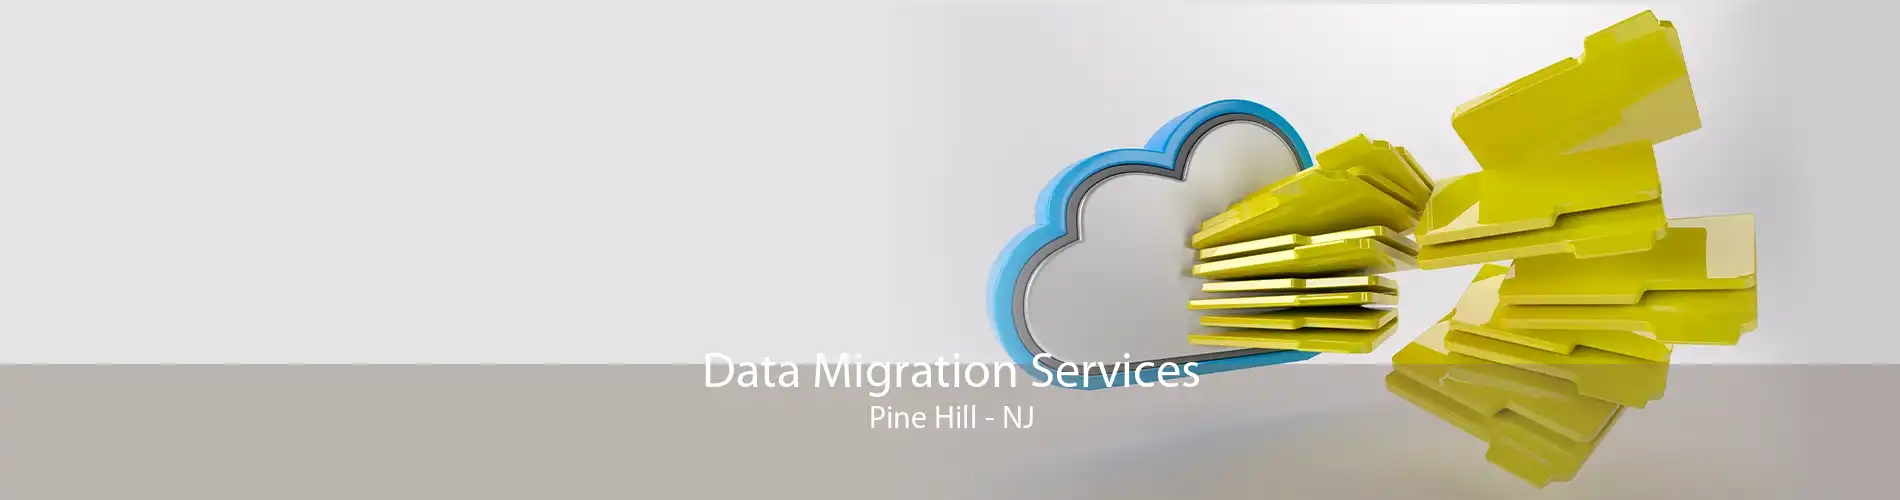 Data Migration Services Pine Hill - NJ